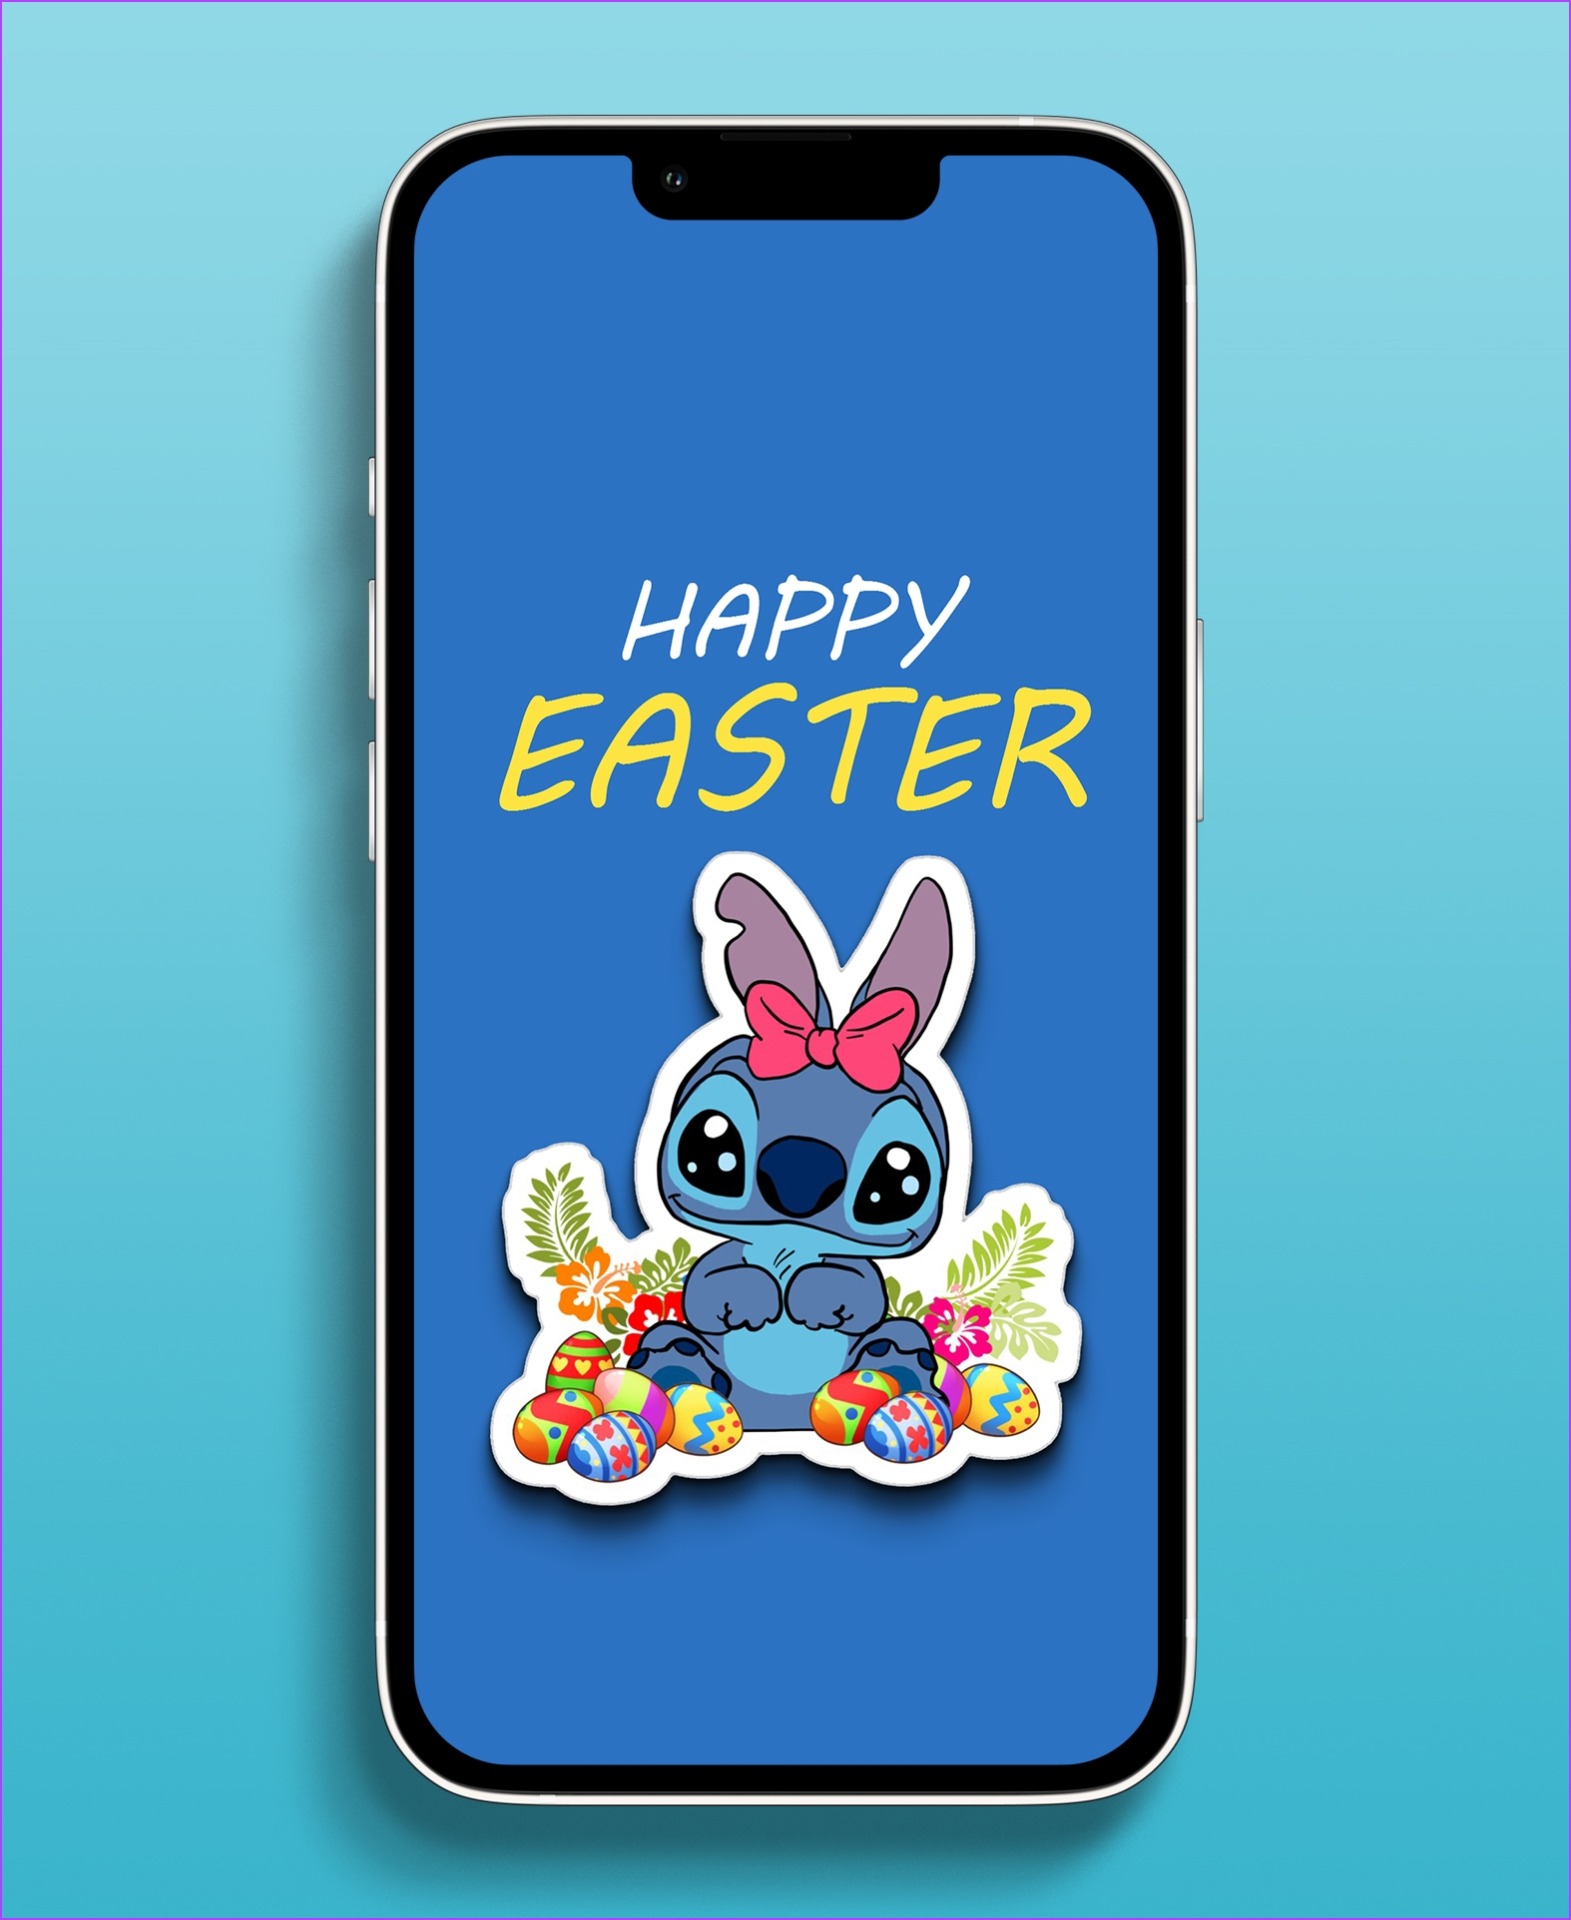 Easter Background Images  Free Download on Freepik